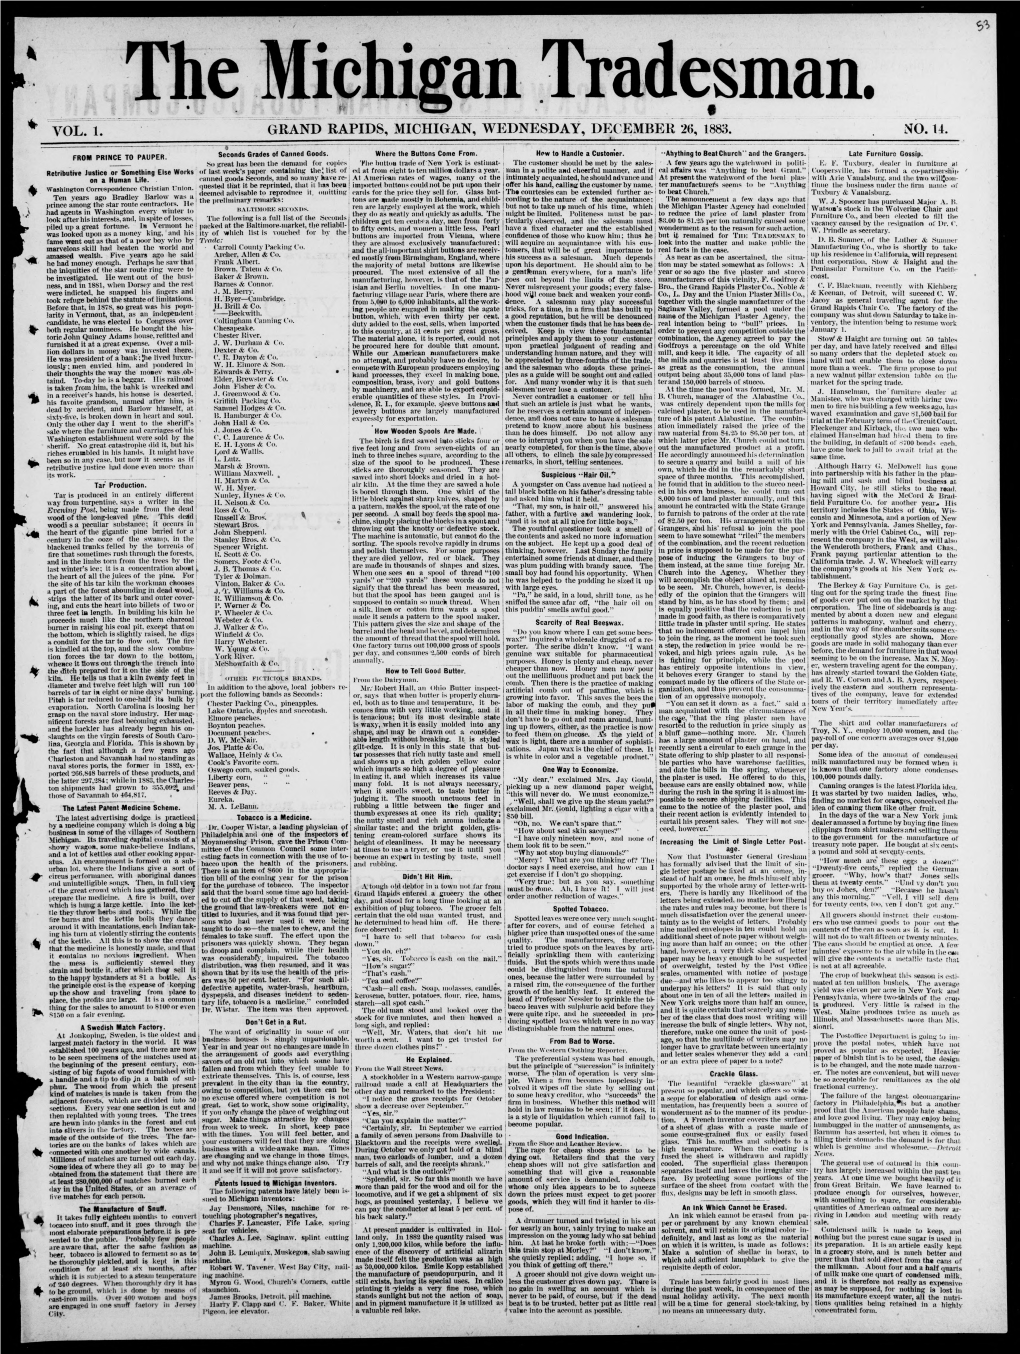 Vol. 1. Grand Rapids, Michigan, Wednesday, December 26, 1883